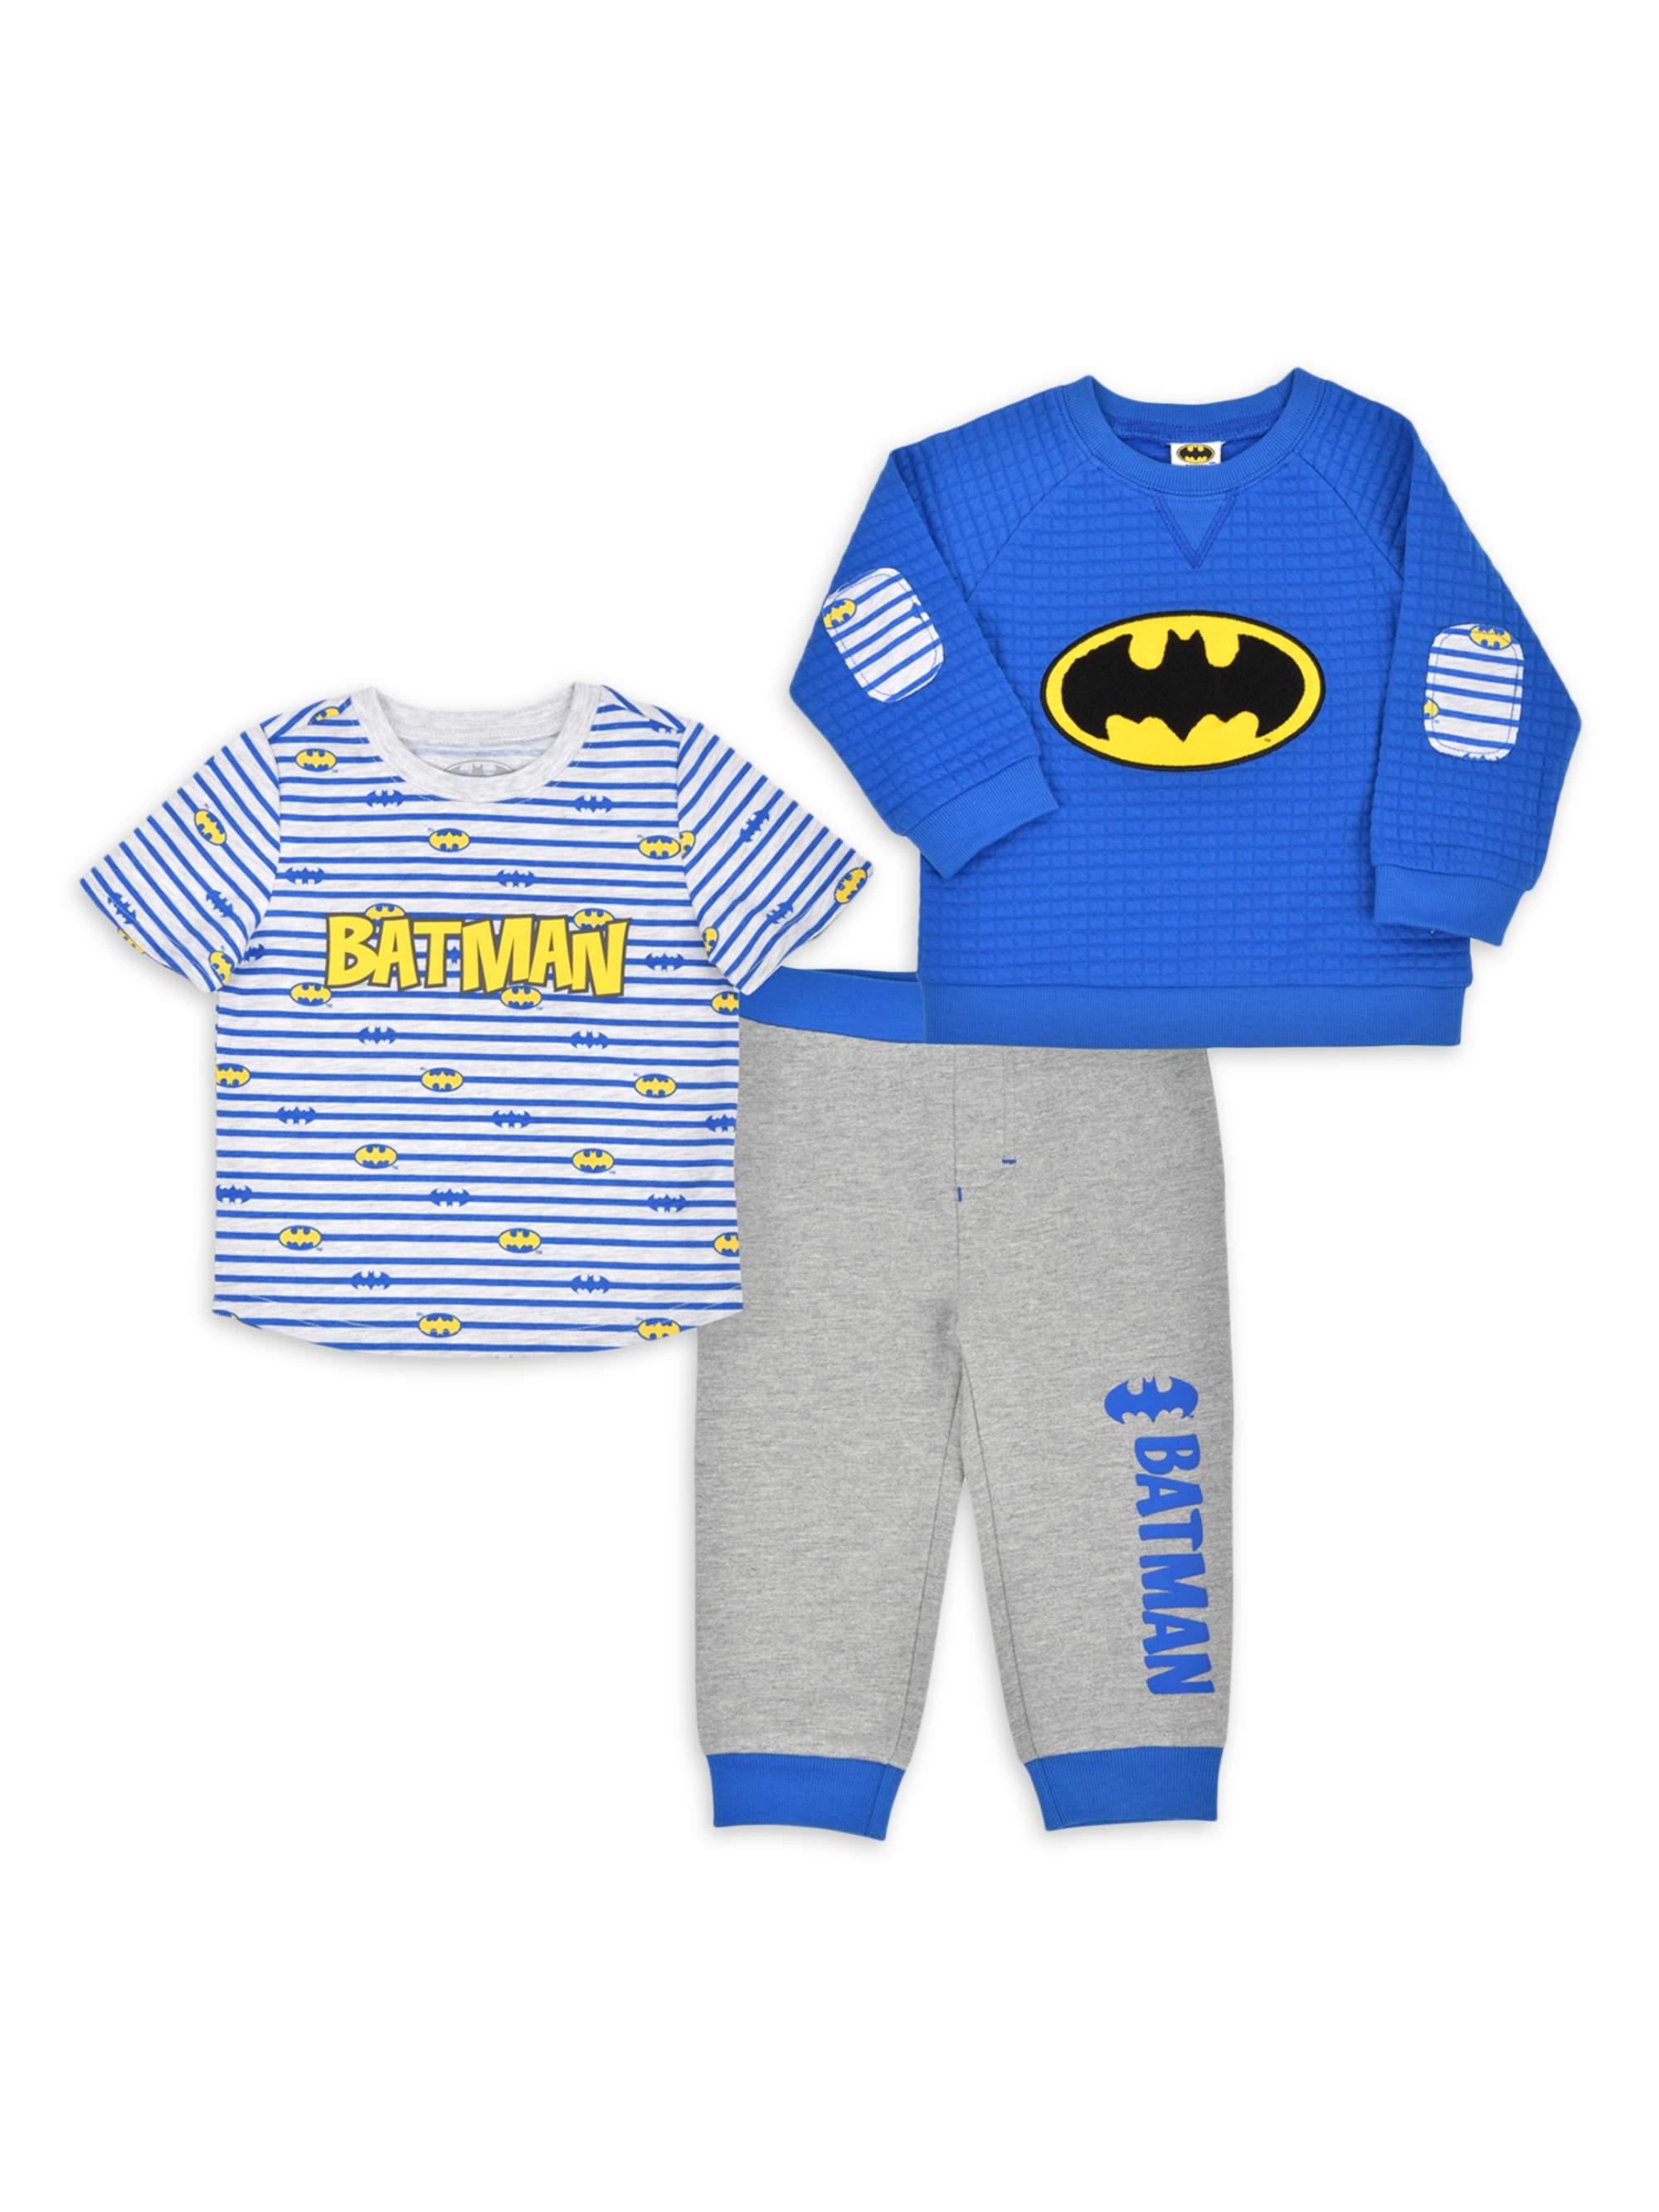 Batman Baby Boy Outfit Set Fleece Long Sleeve Crew, T-Shirt, and Pants, 3pc - image 1 of 1